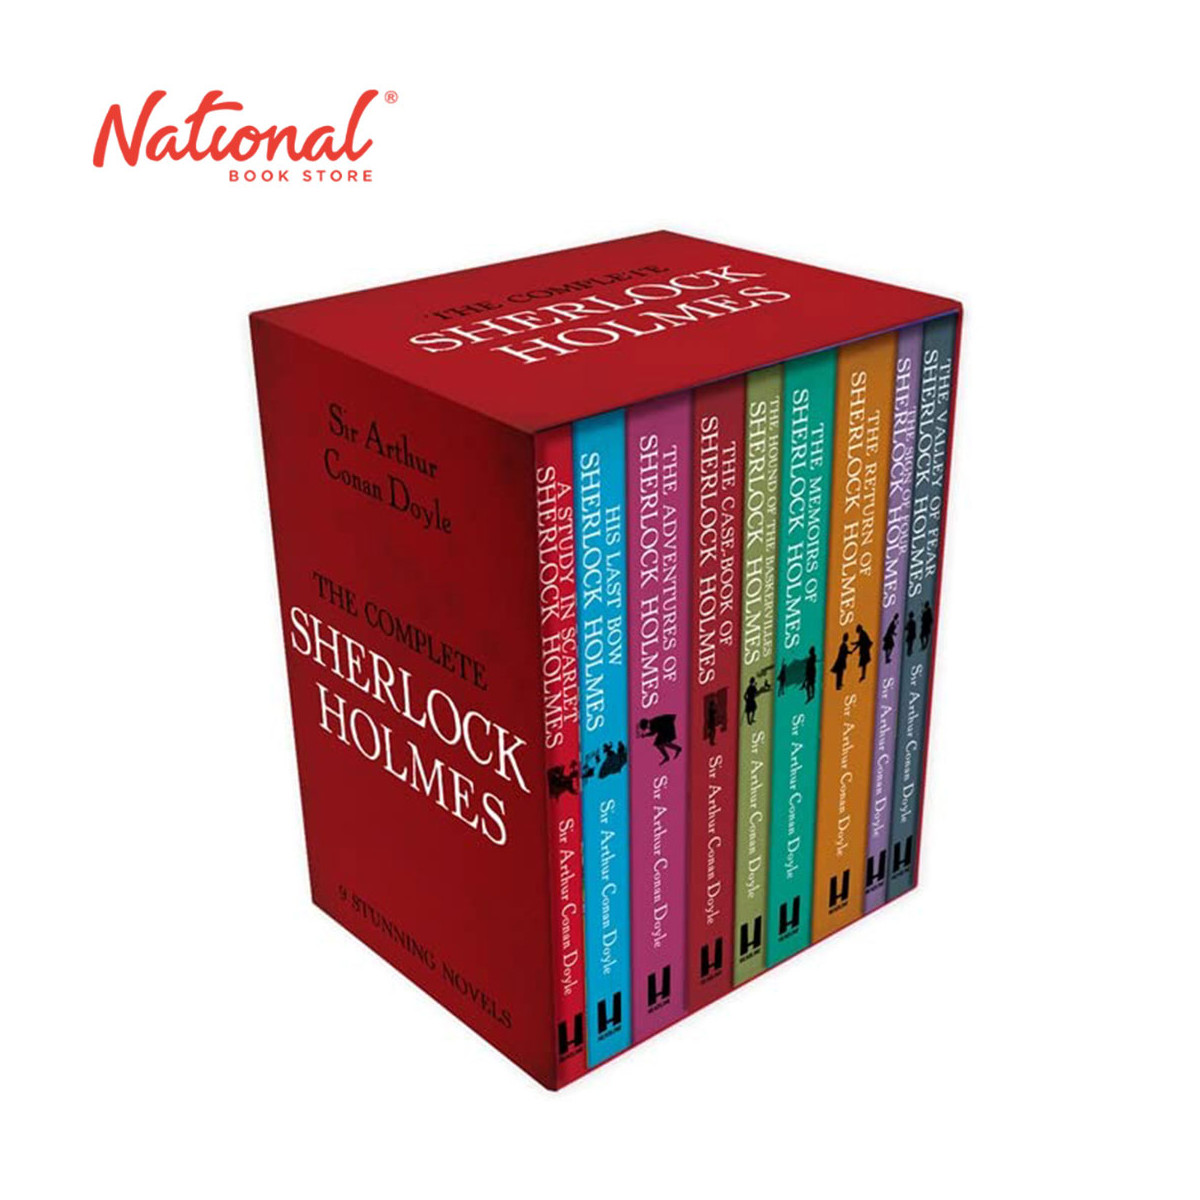 Complete Sherlock Holmes Collection Boxset (9 Books) by Sir Arthur Conan Doyle - Trade Paperback